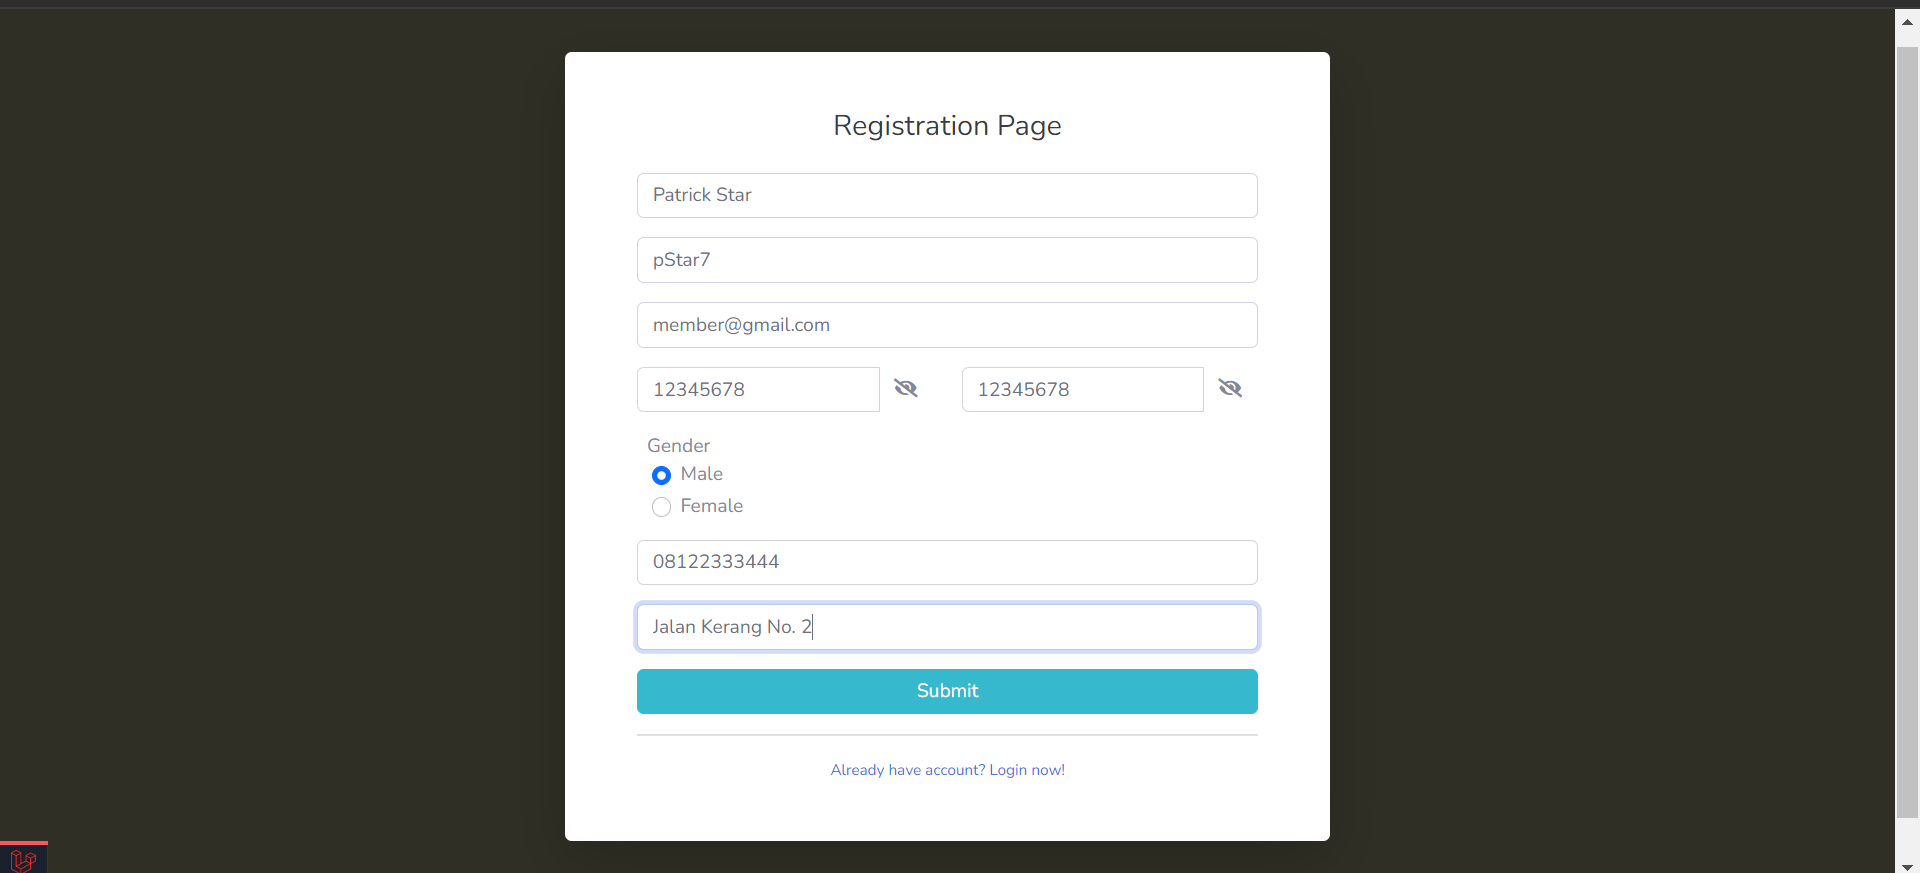 "Registration Page"